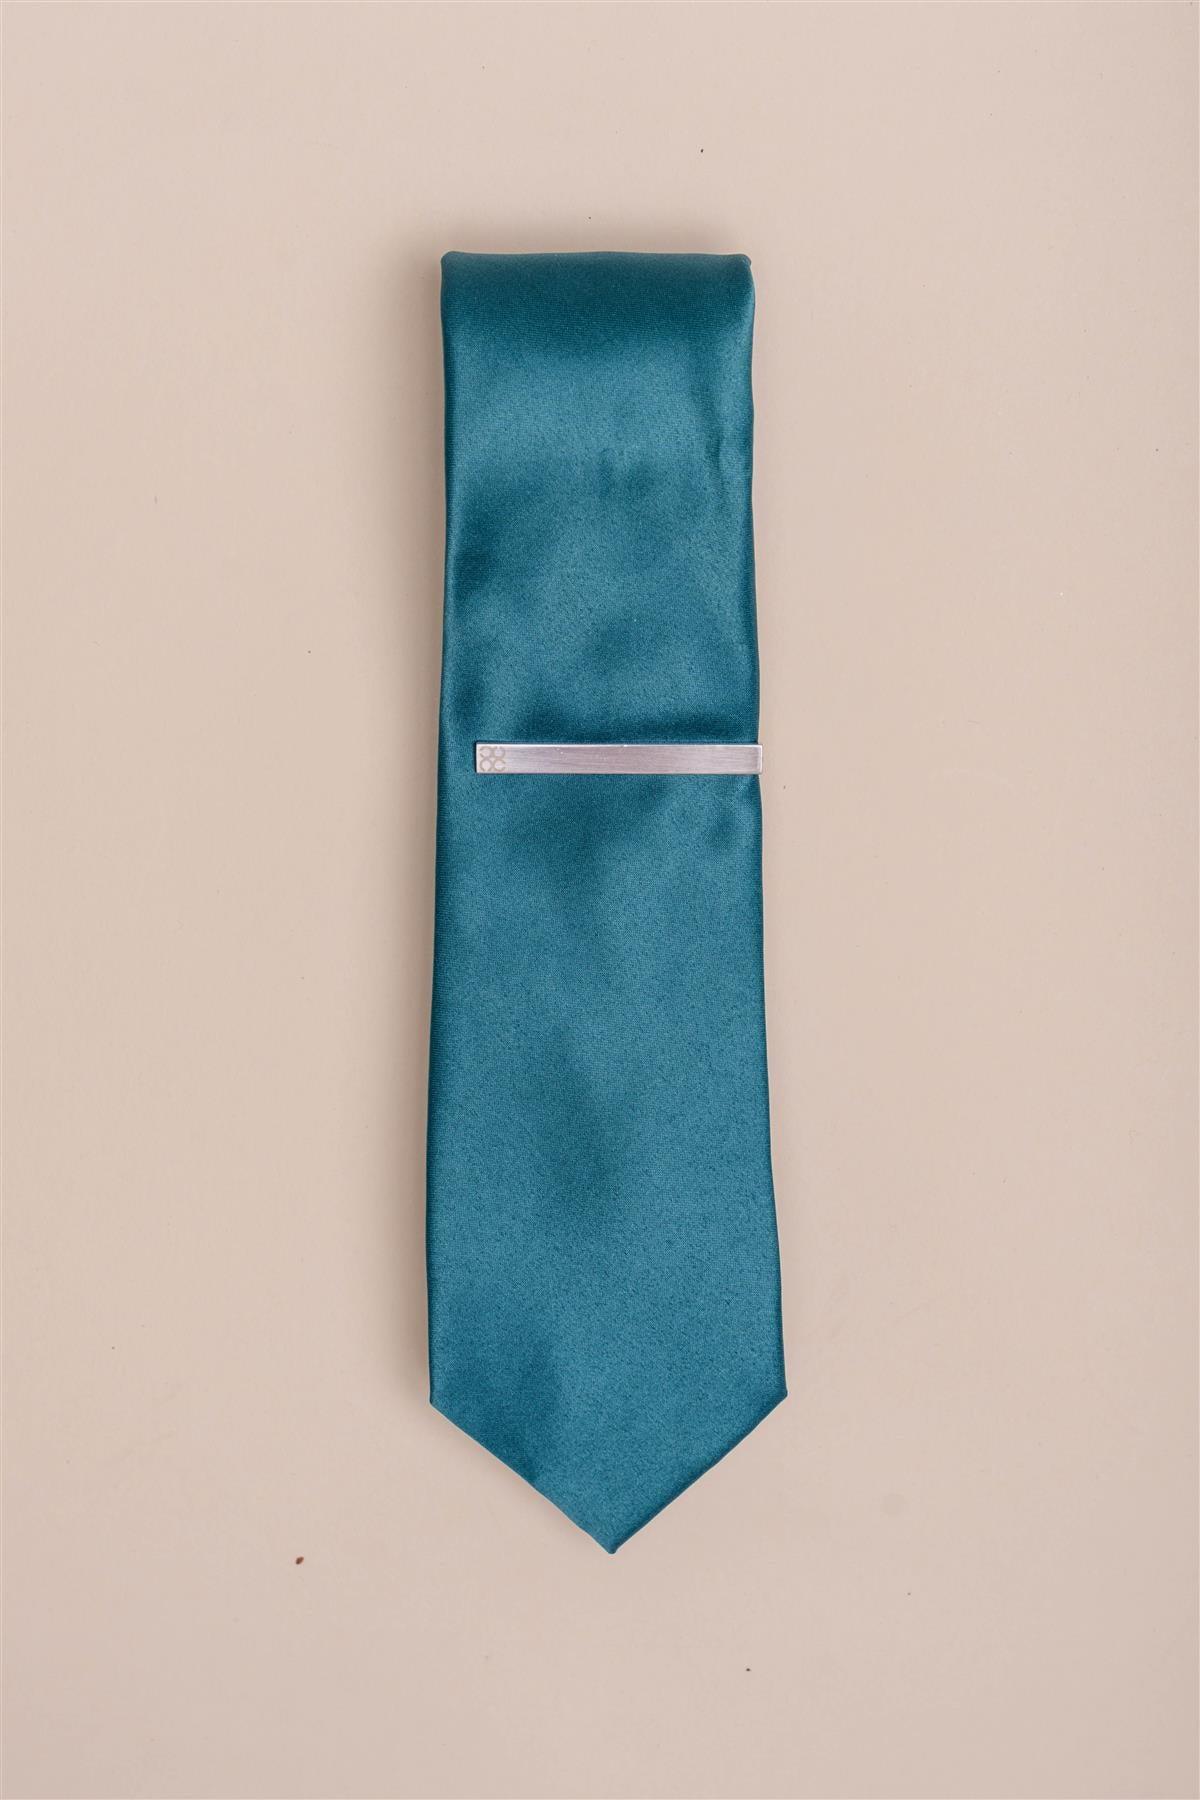 Plain aqua tie set